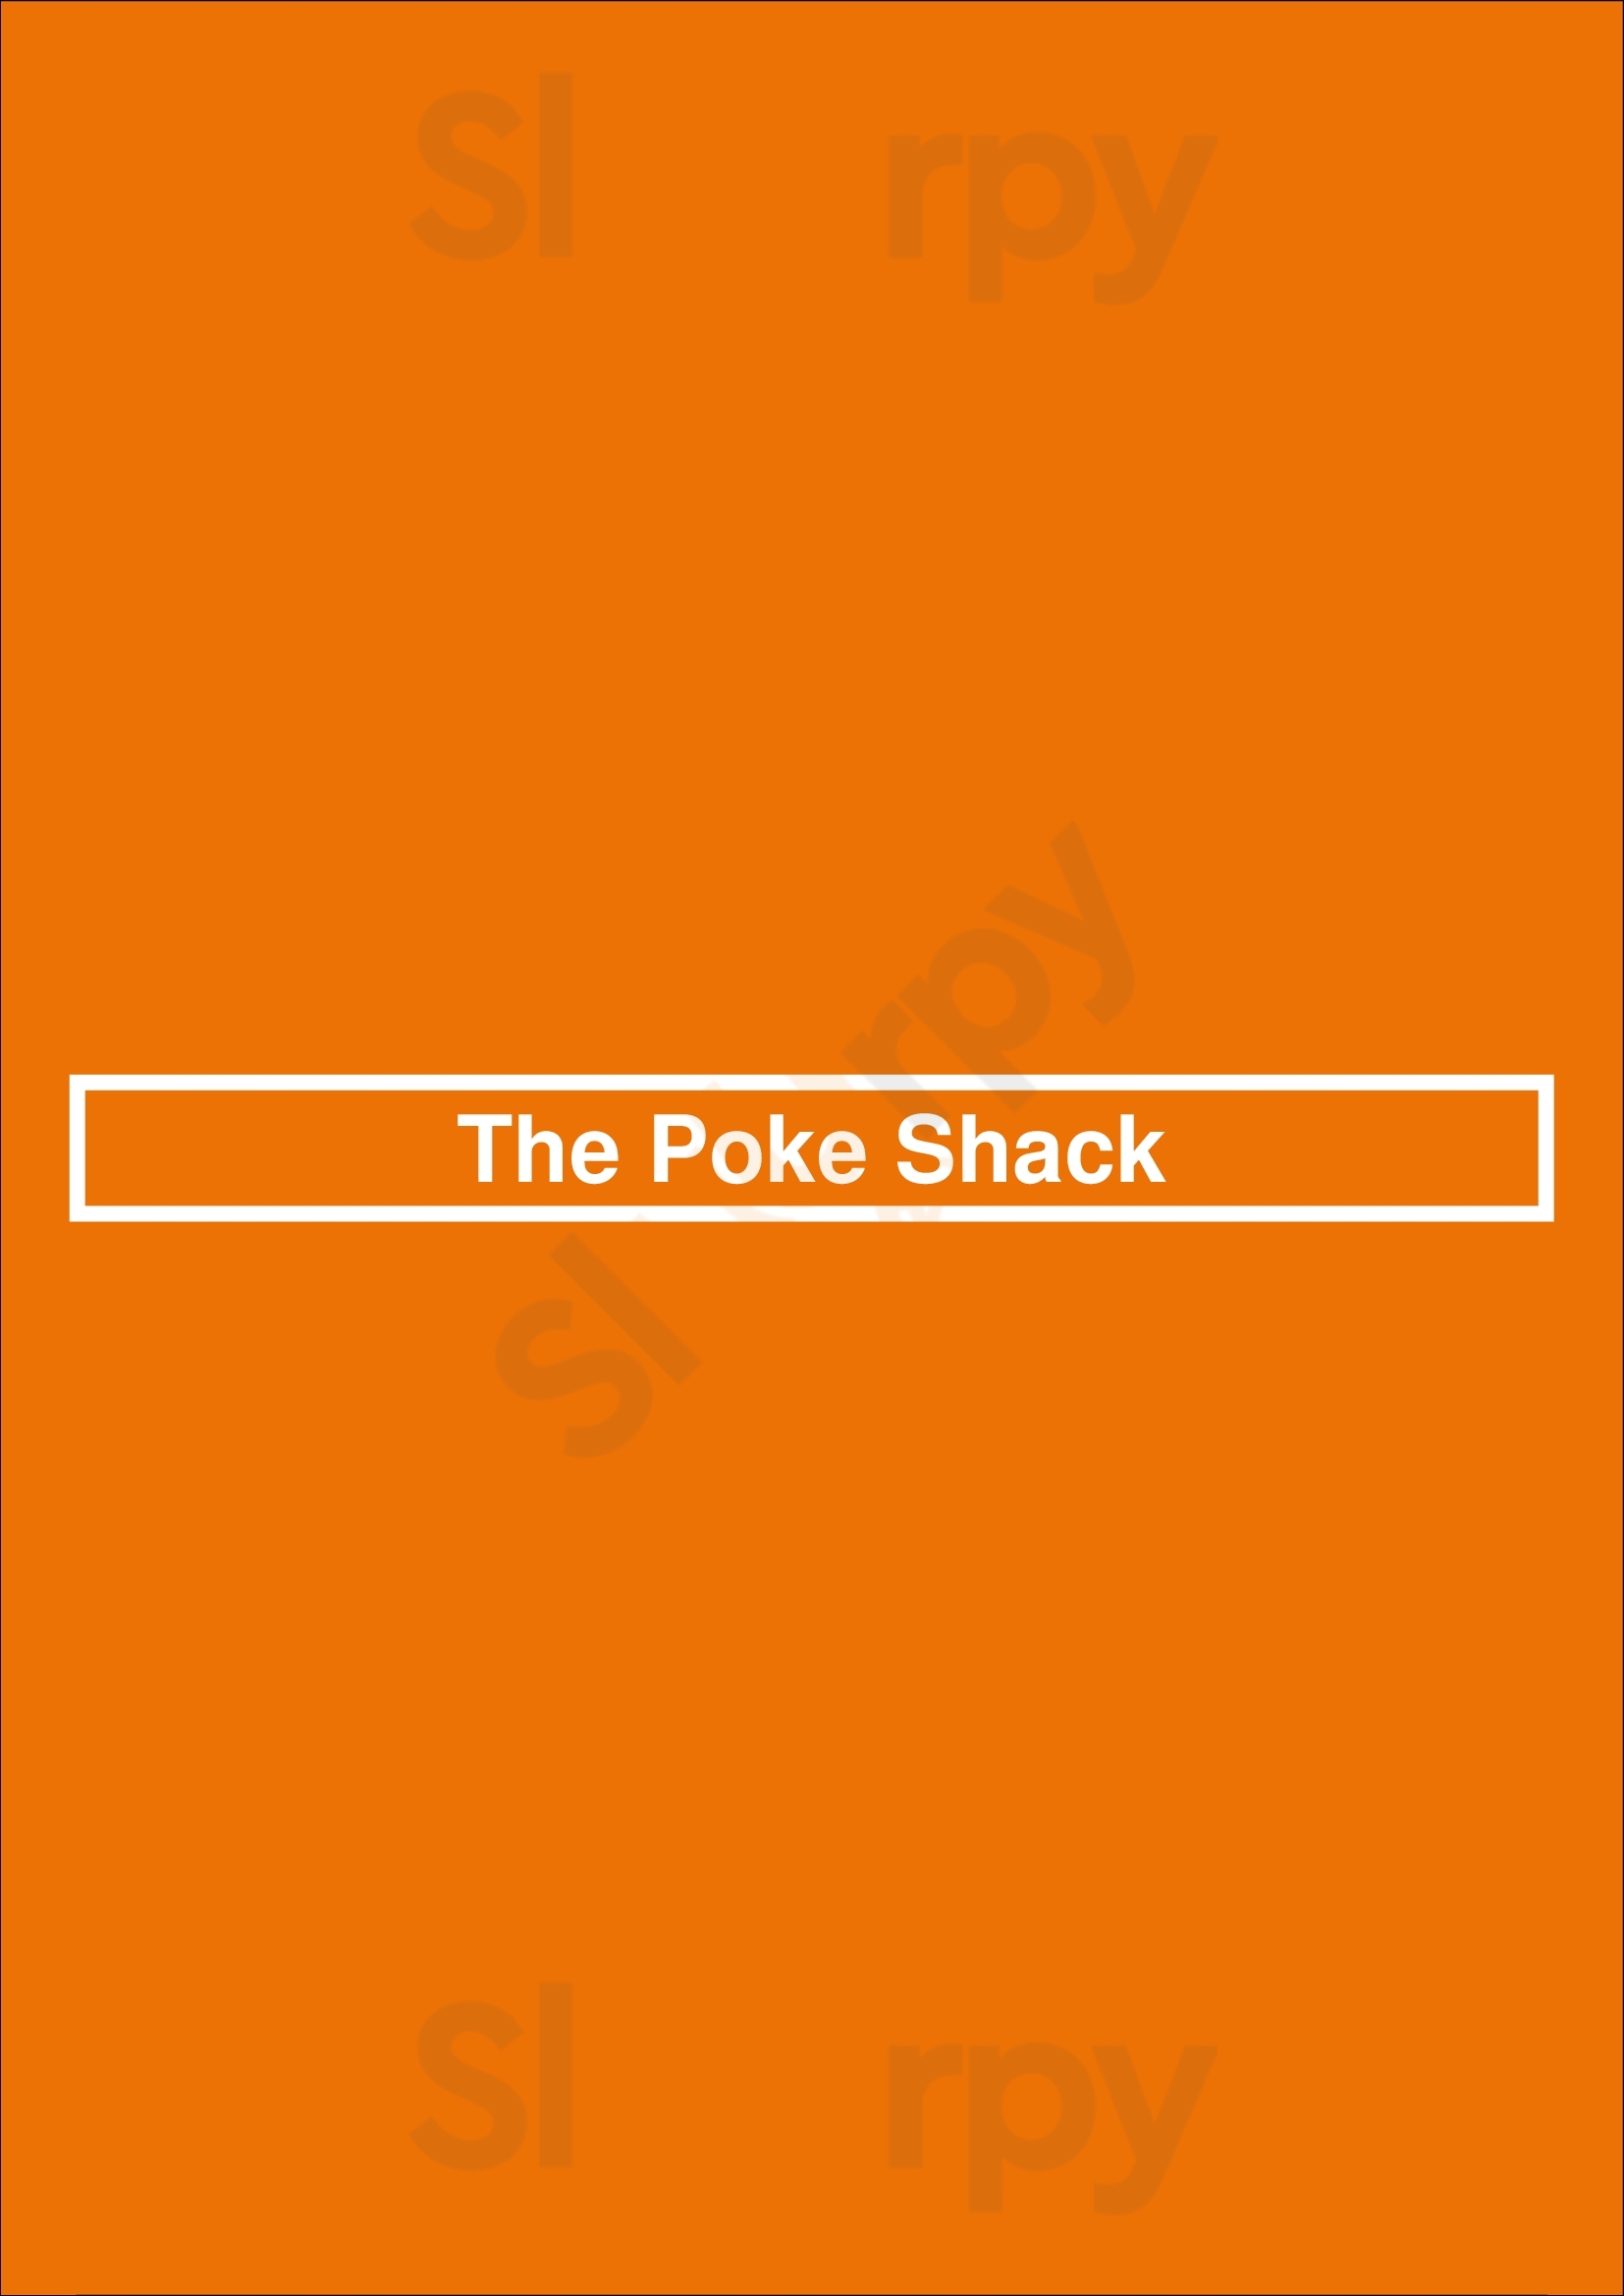 The Poke Shack Los Angeles Menu - 1